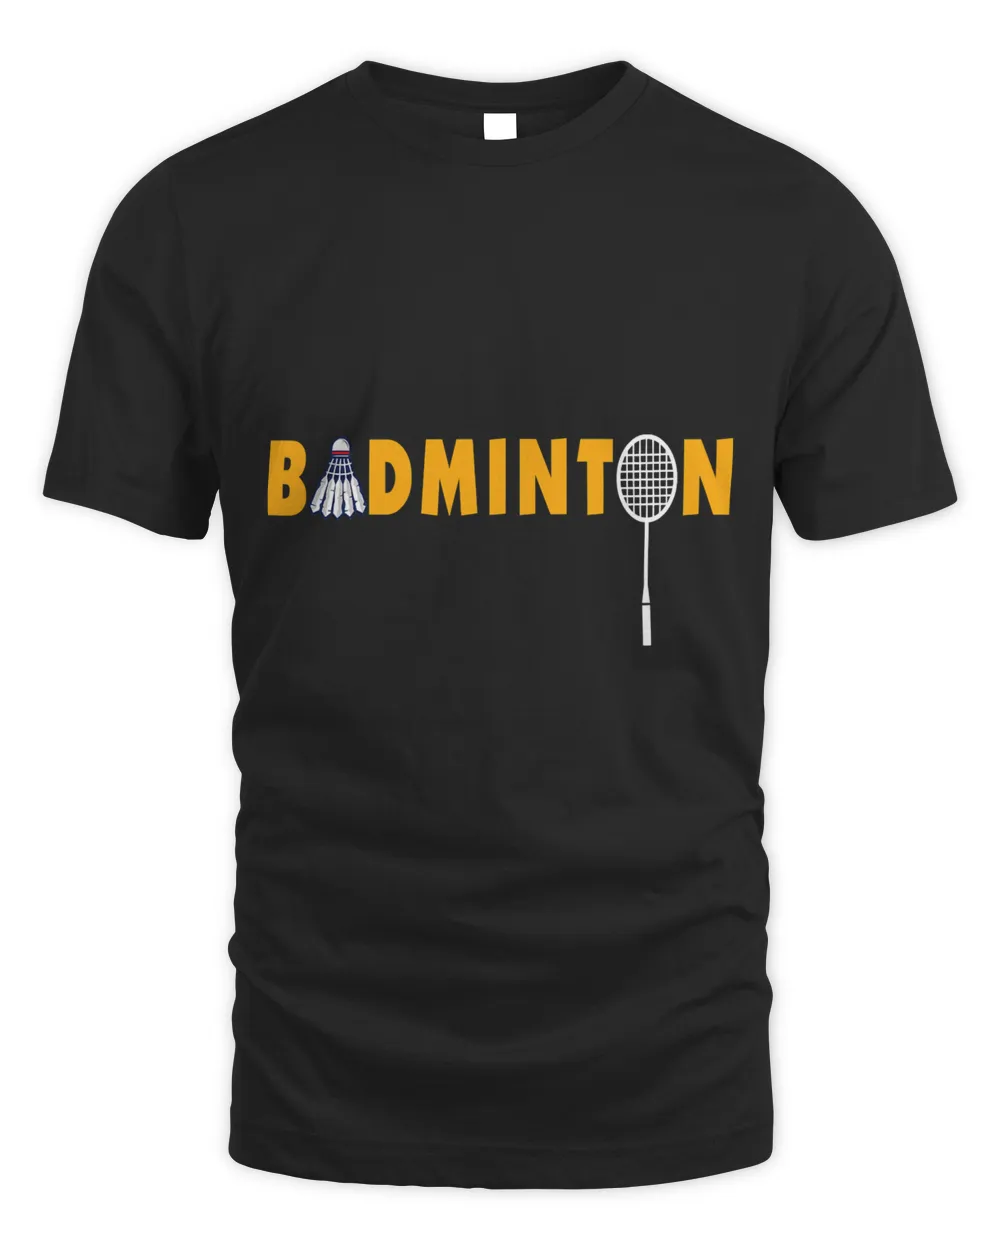 Shuttlecock Birdie Badminton Shirt - Shuttle Gift T-Shirt